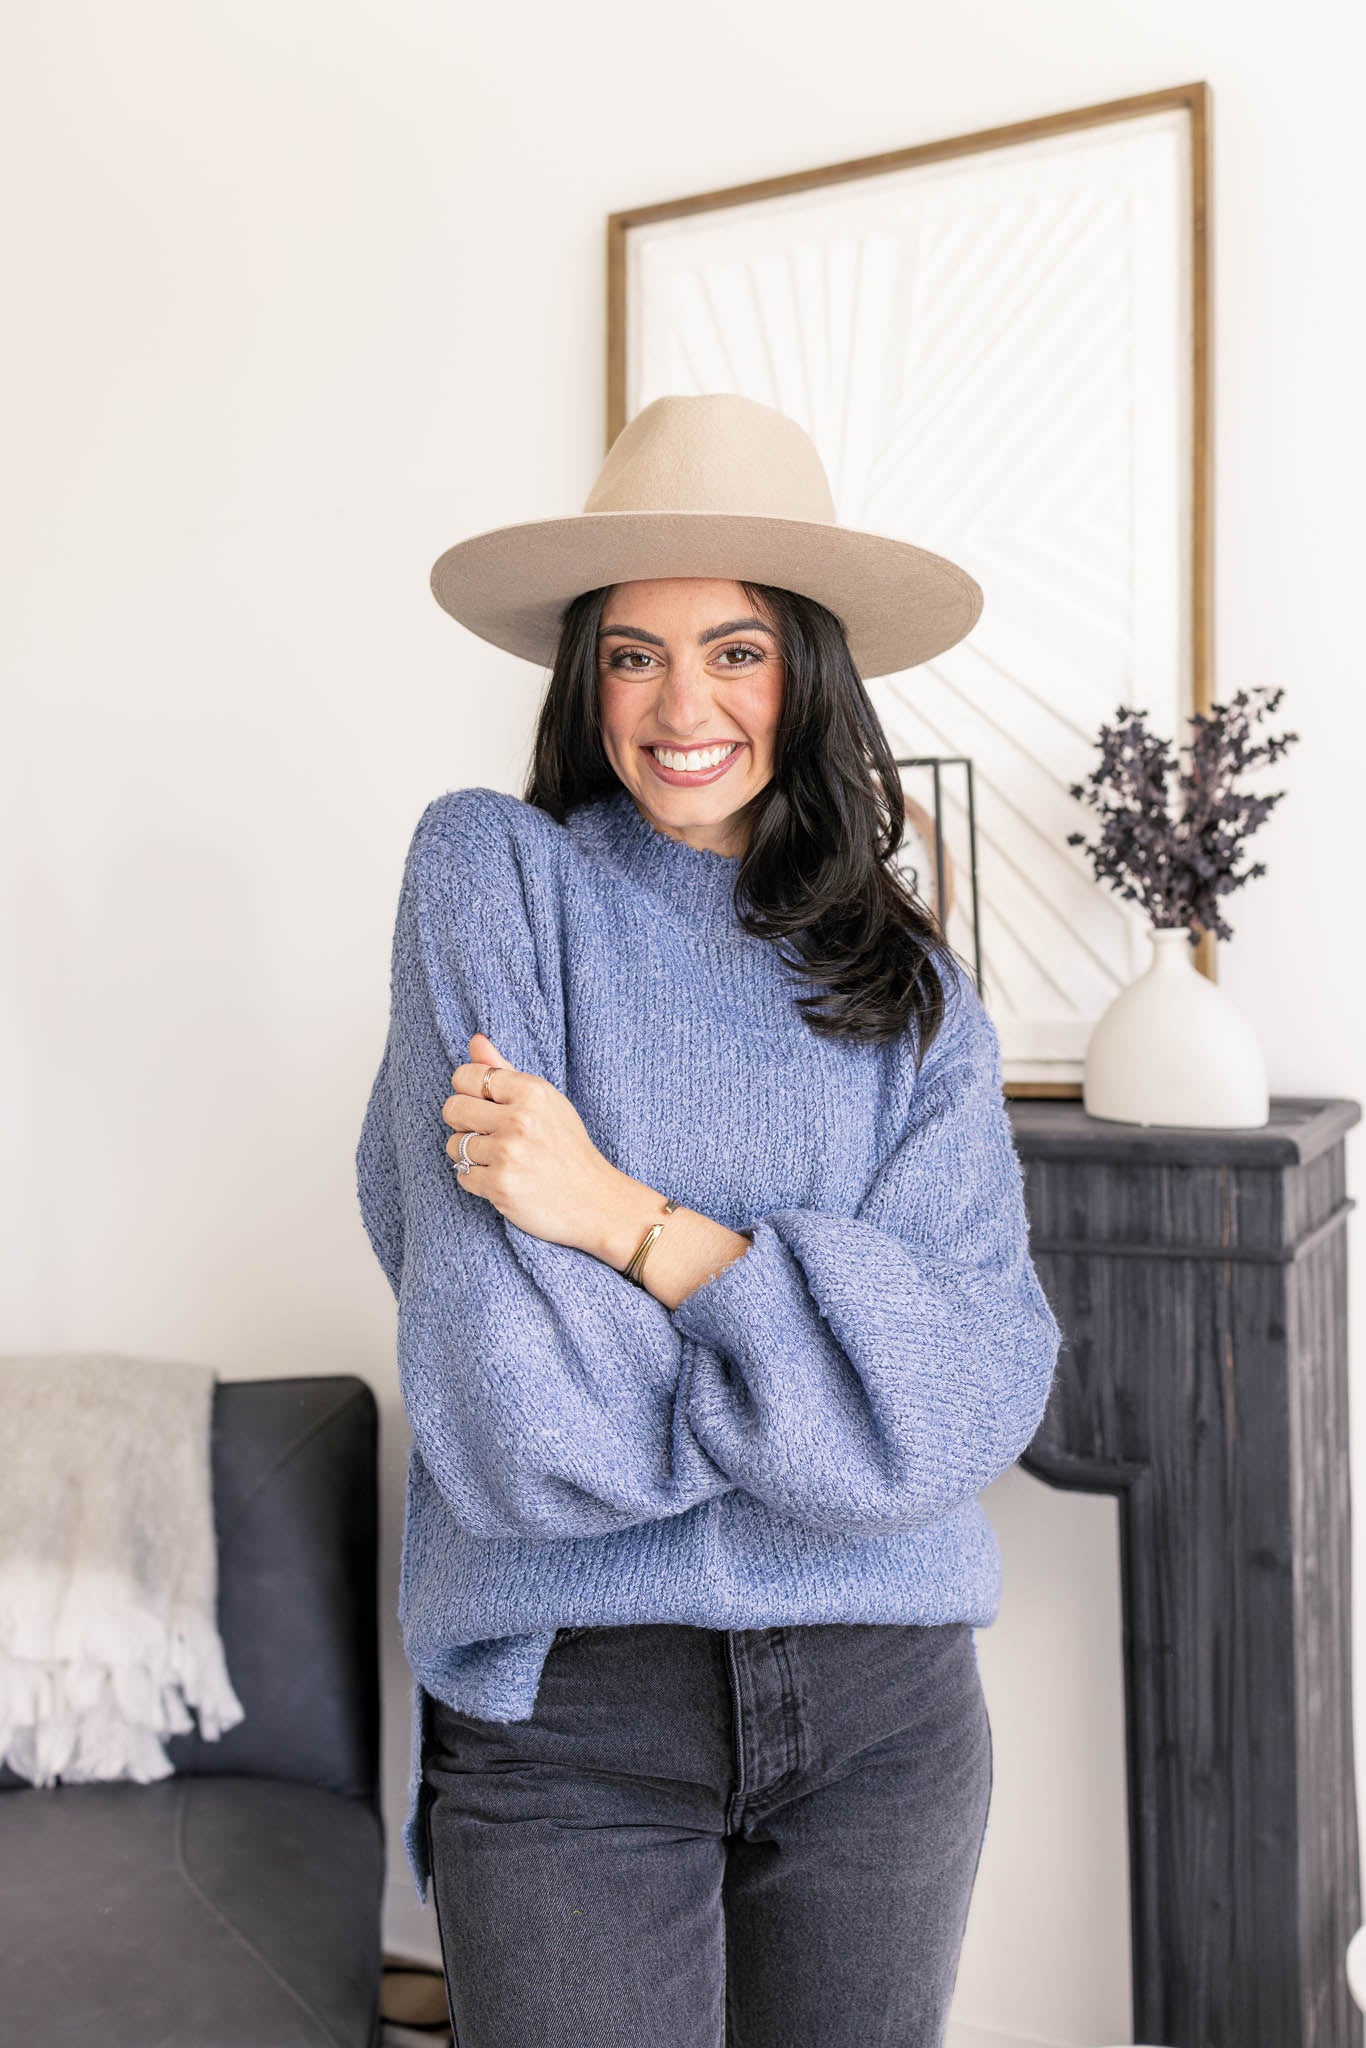 Tamia Knit Sweater